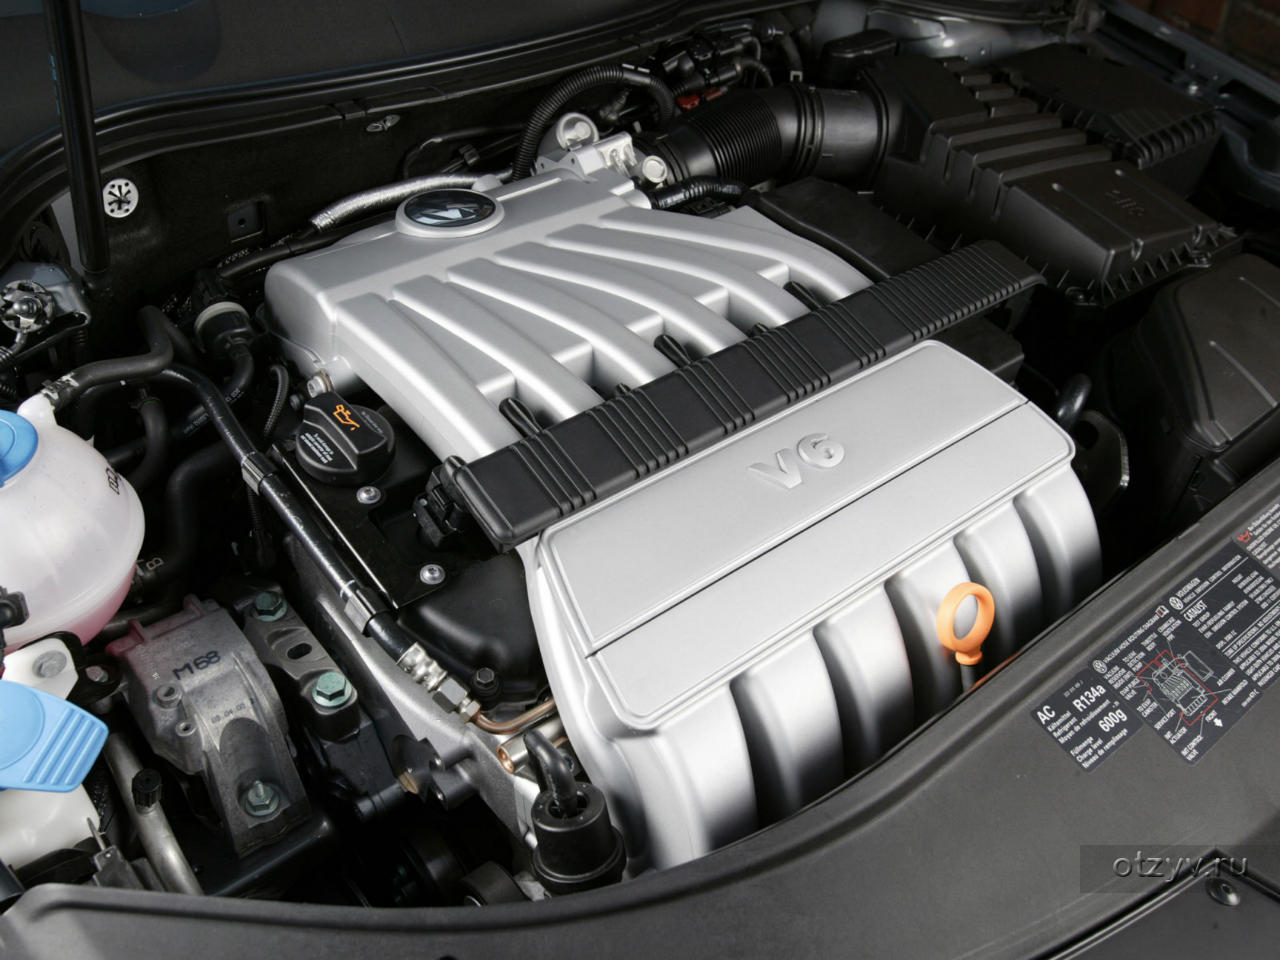 Купить двигатель v6. Volkswagen Passat мотор v6. Passat b6 3.6. Passat 3.6 FSI. VW Passat b6 vr6 3.6.